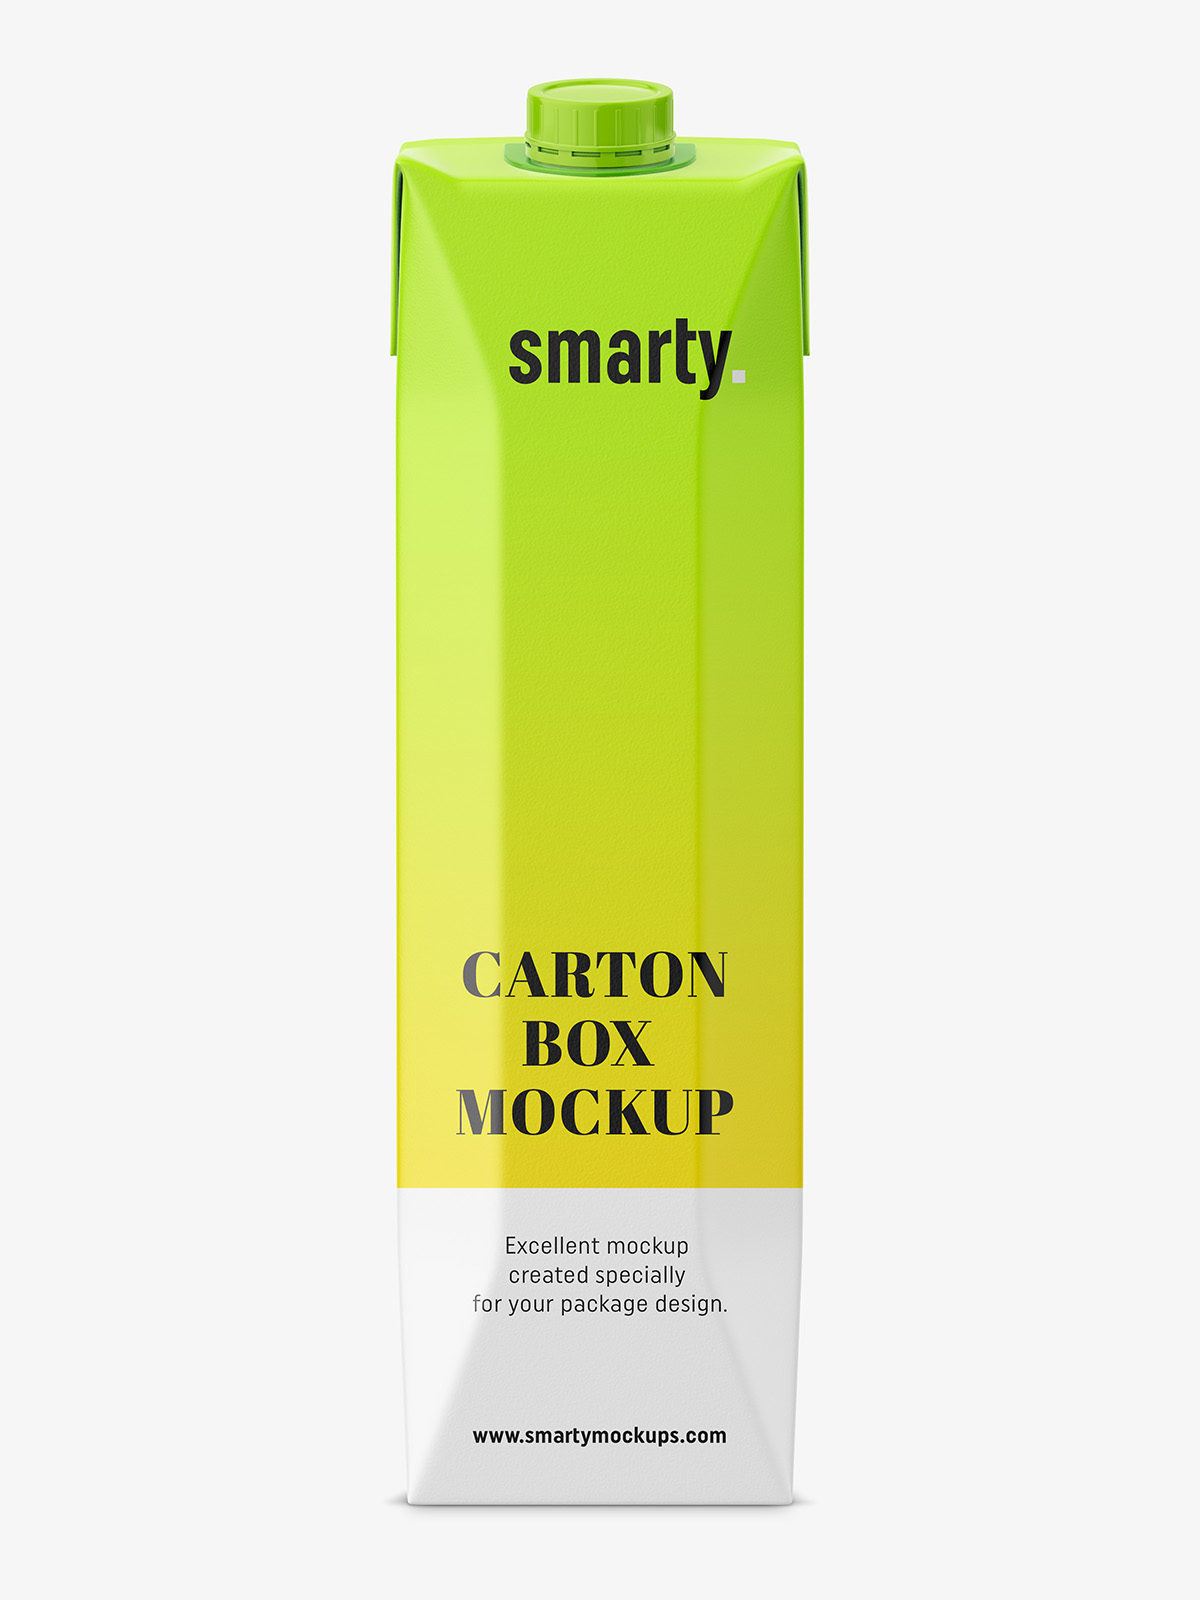 Download Juice carton box mockup - Smarty Mockups